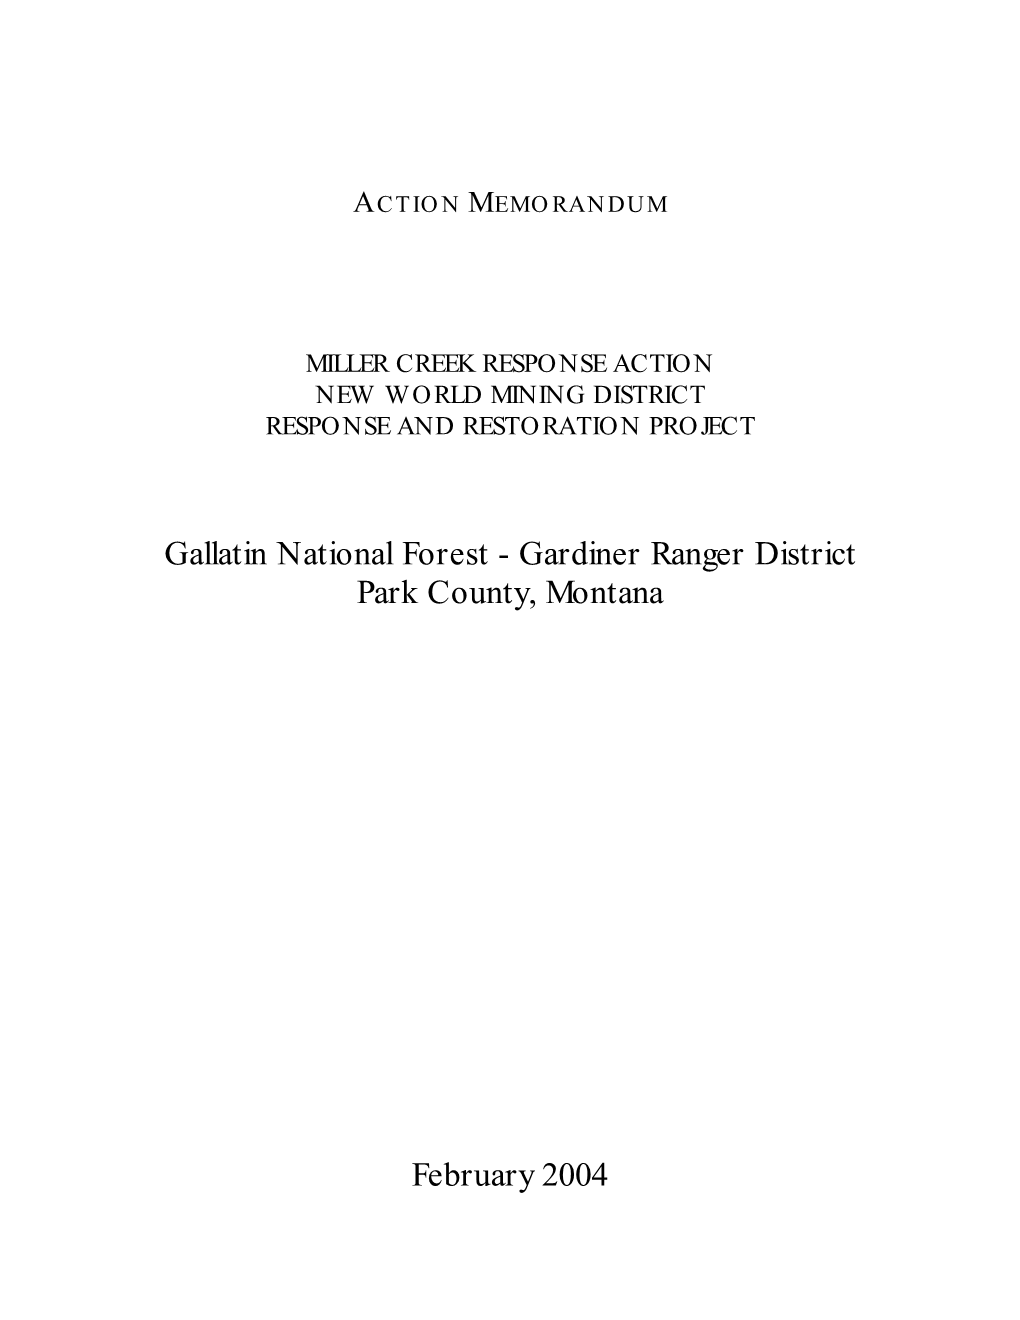 Gardiner Ranger District Park County, Montana February 2004